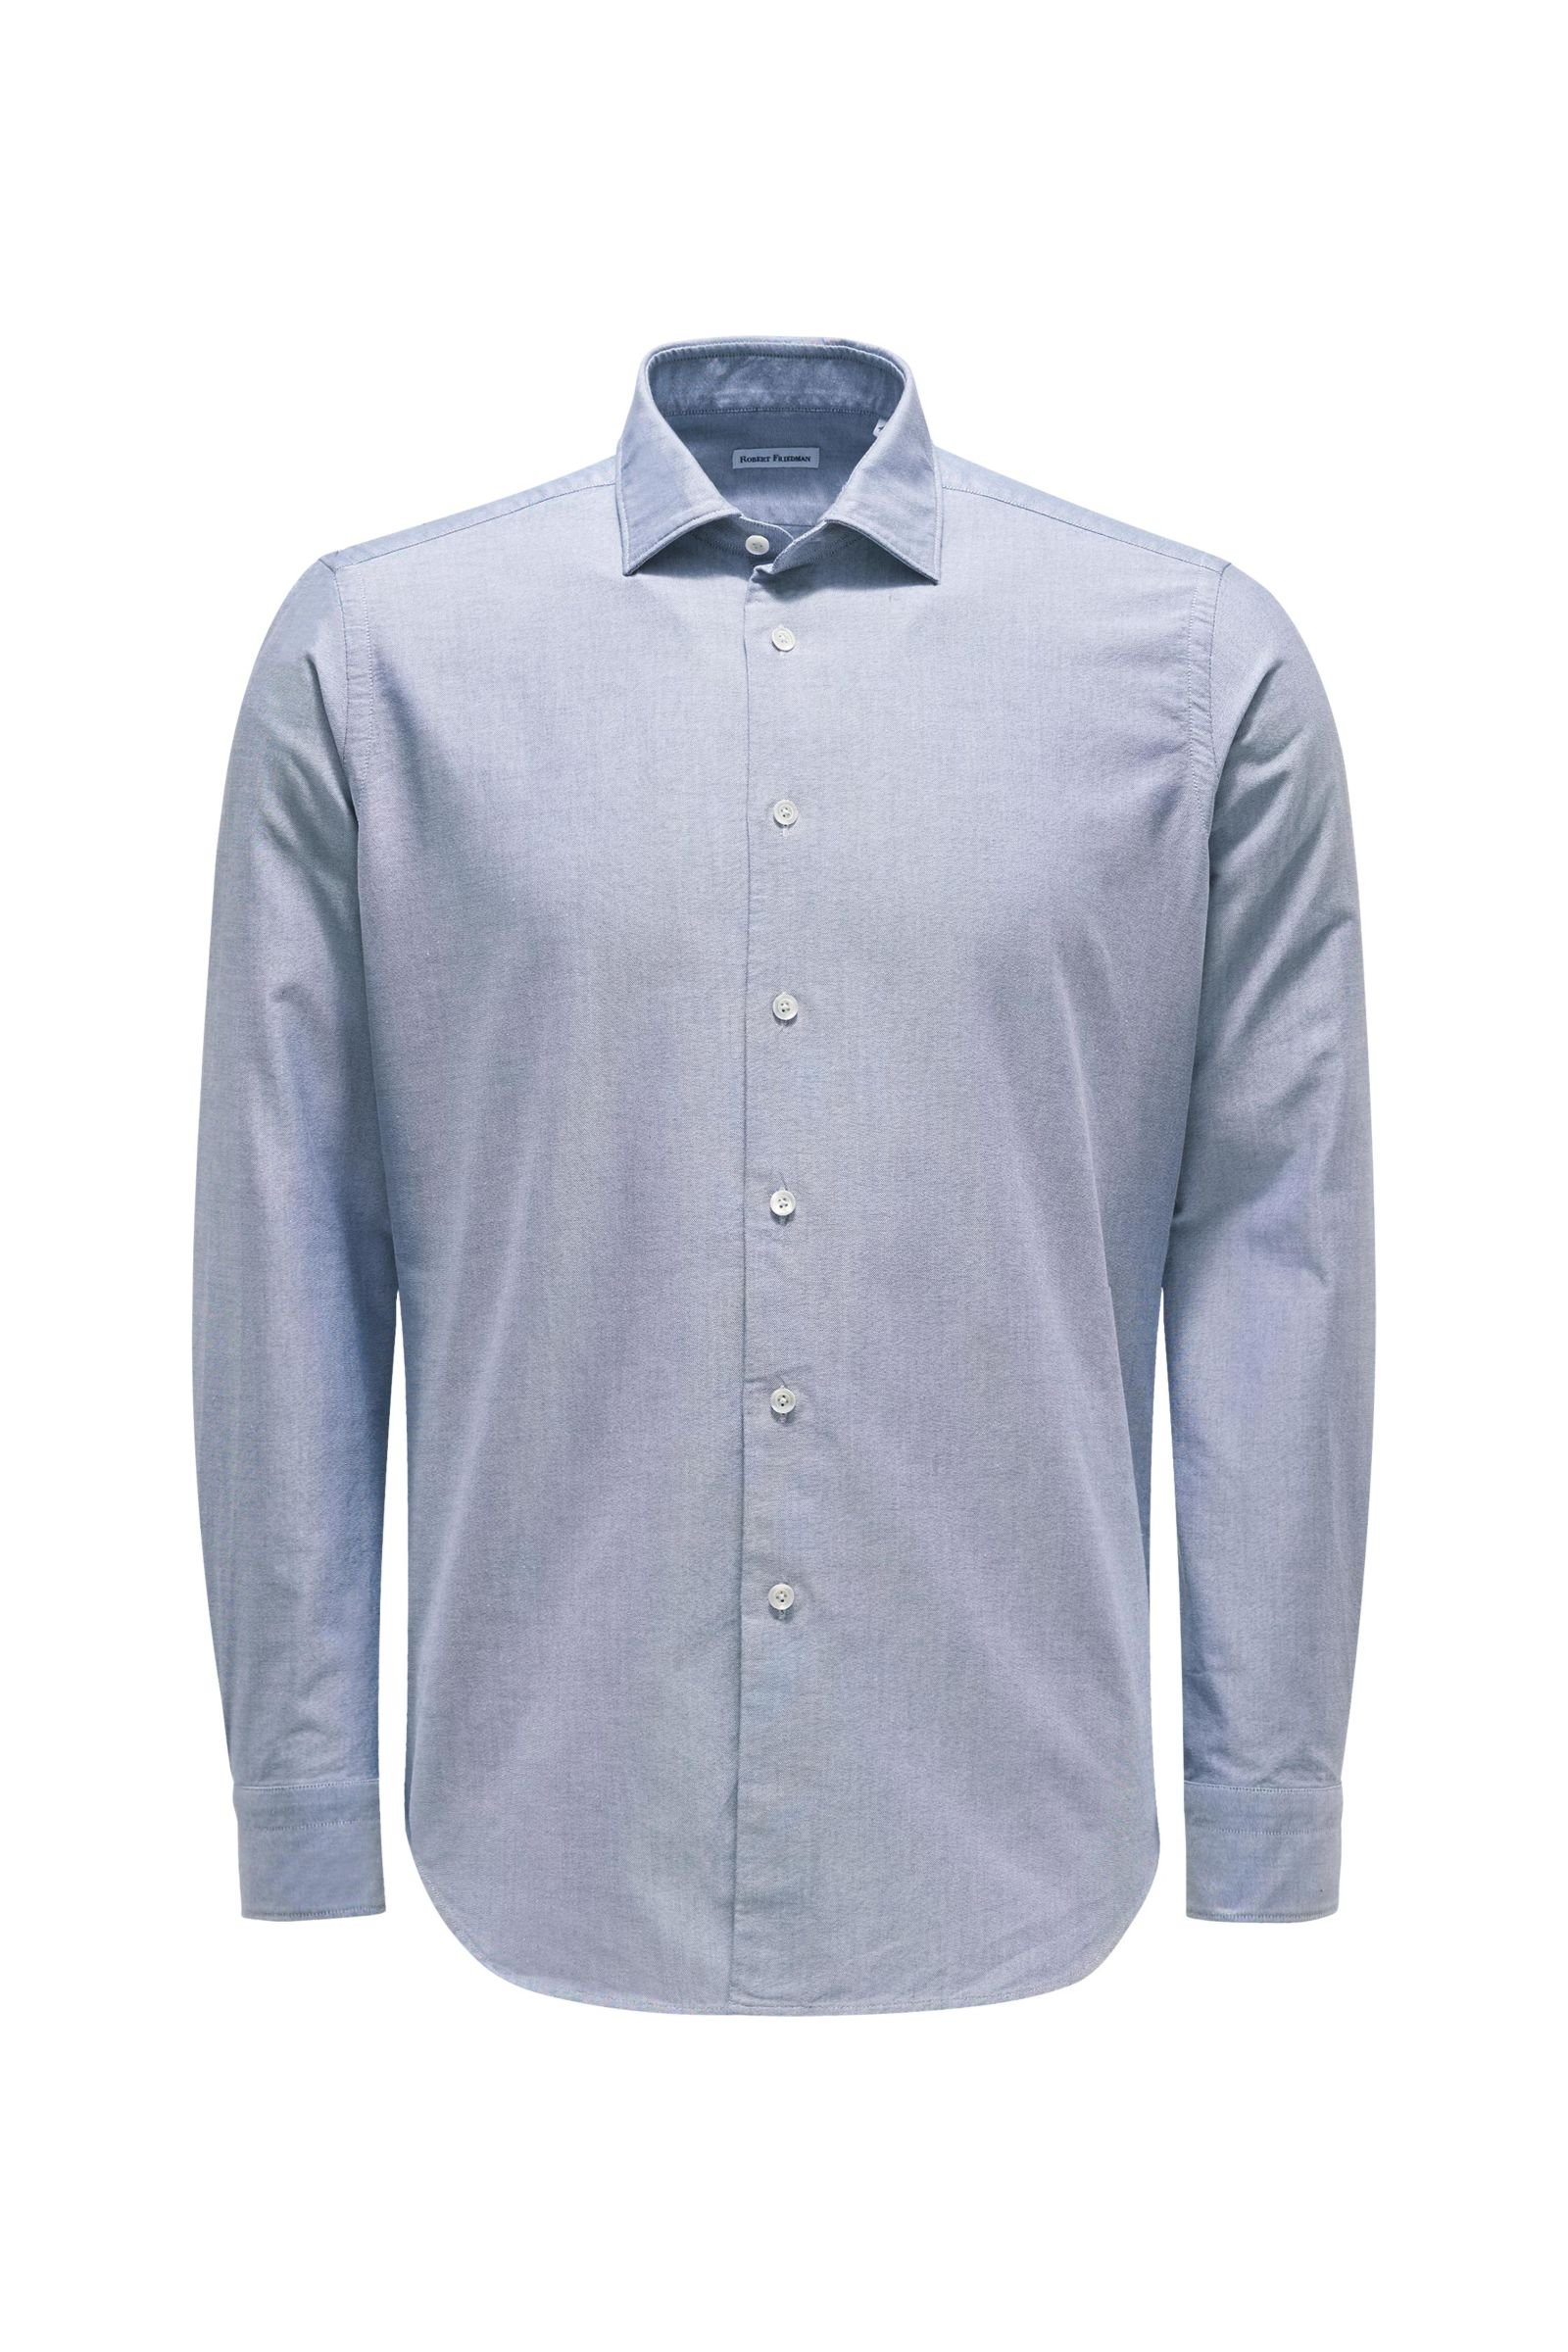 Oxford shirt 'Leo' slim collar grey-blue